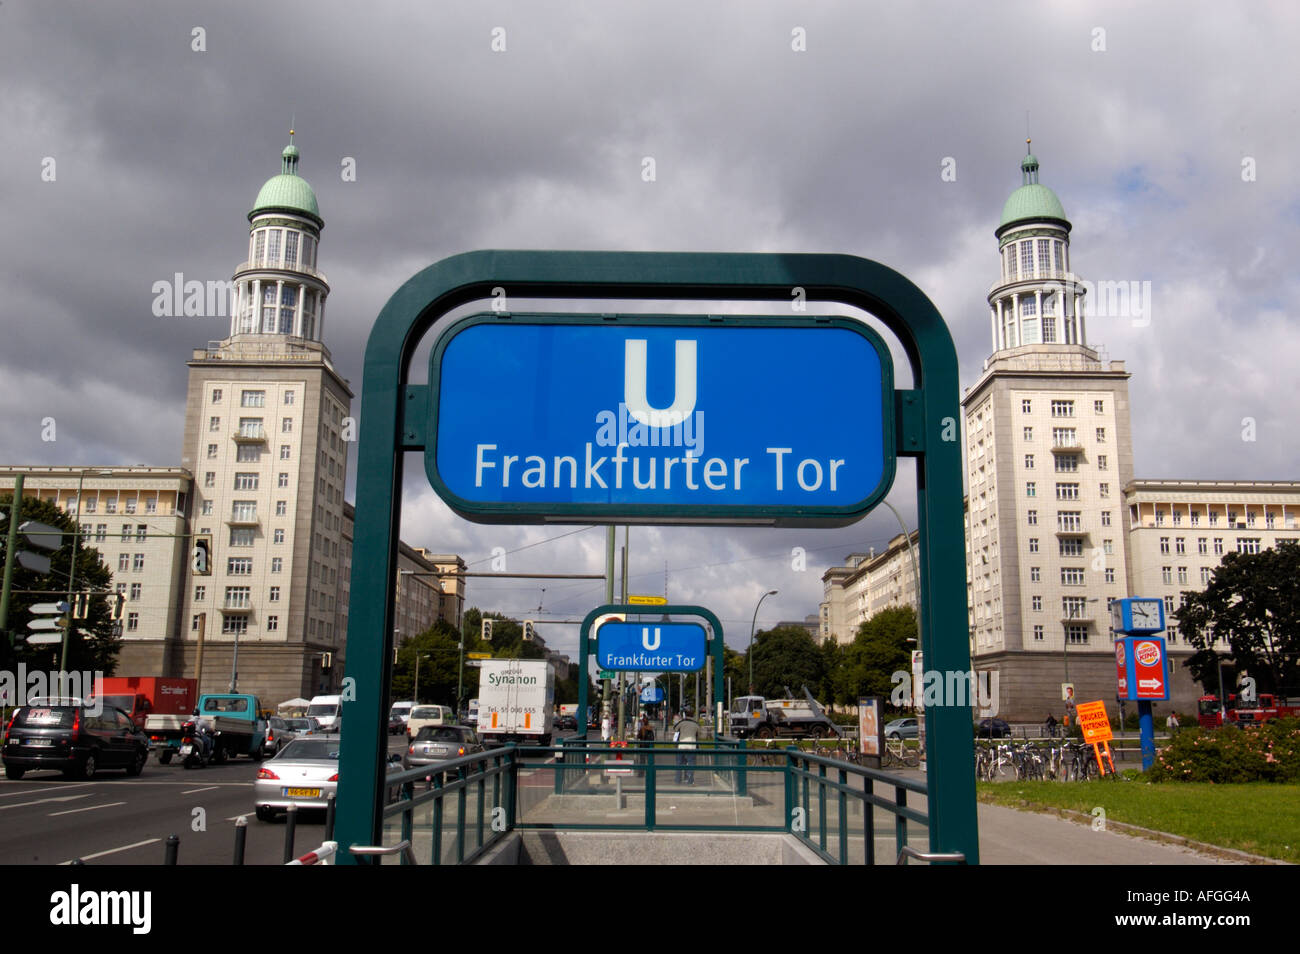 Frankfurter Tor building in distinctive soviet architectural style on Karl Marx Allee in former East Berlin 2005 Stock Photo